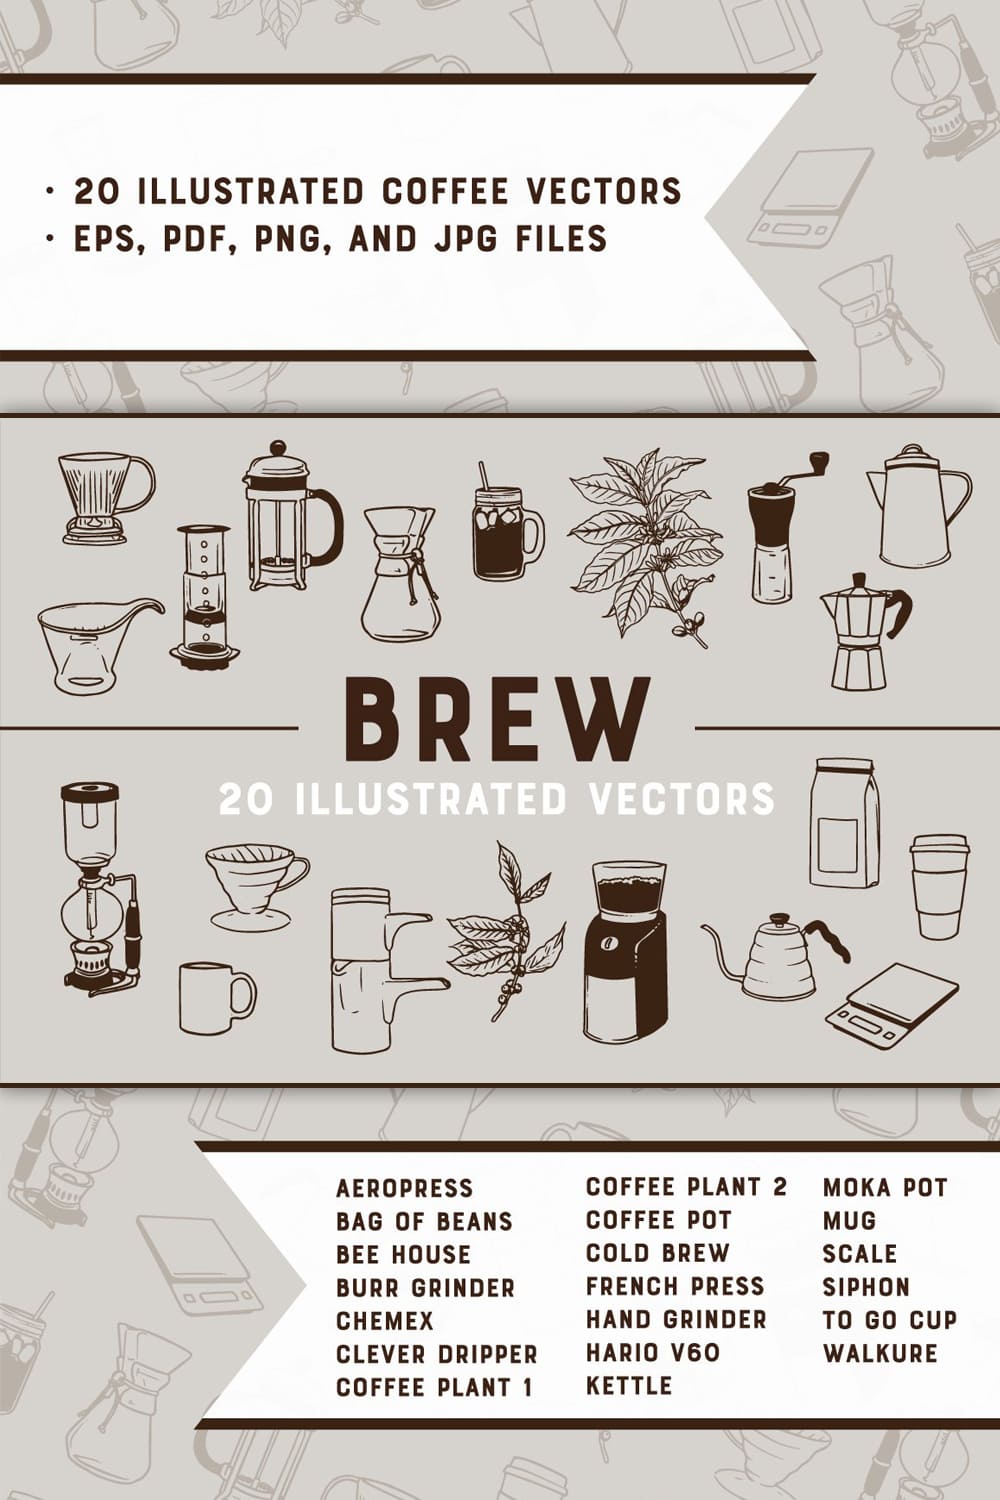 Brew 20 Coffee Vectors pinterest image.